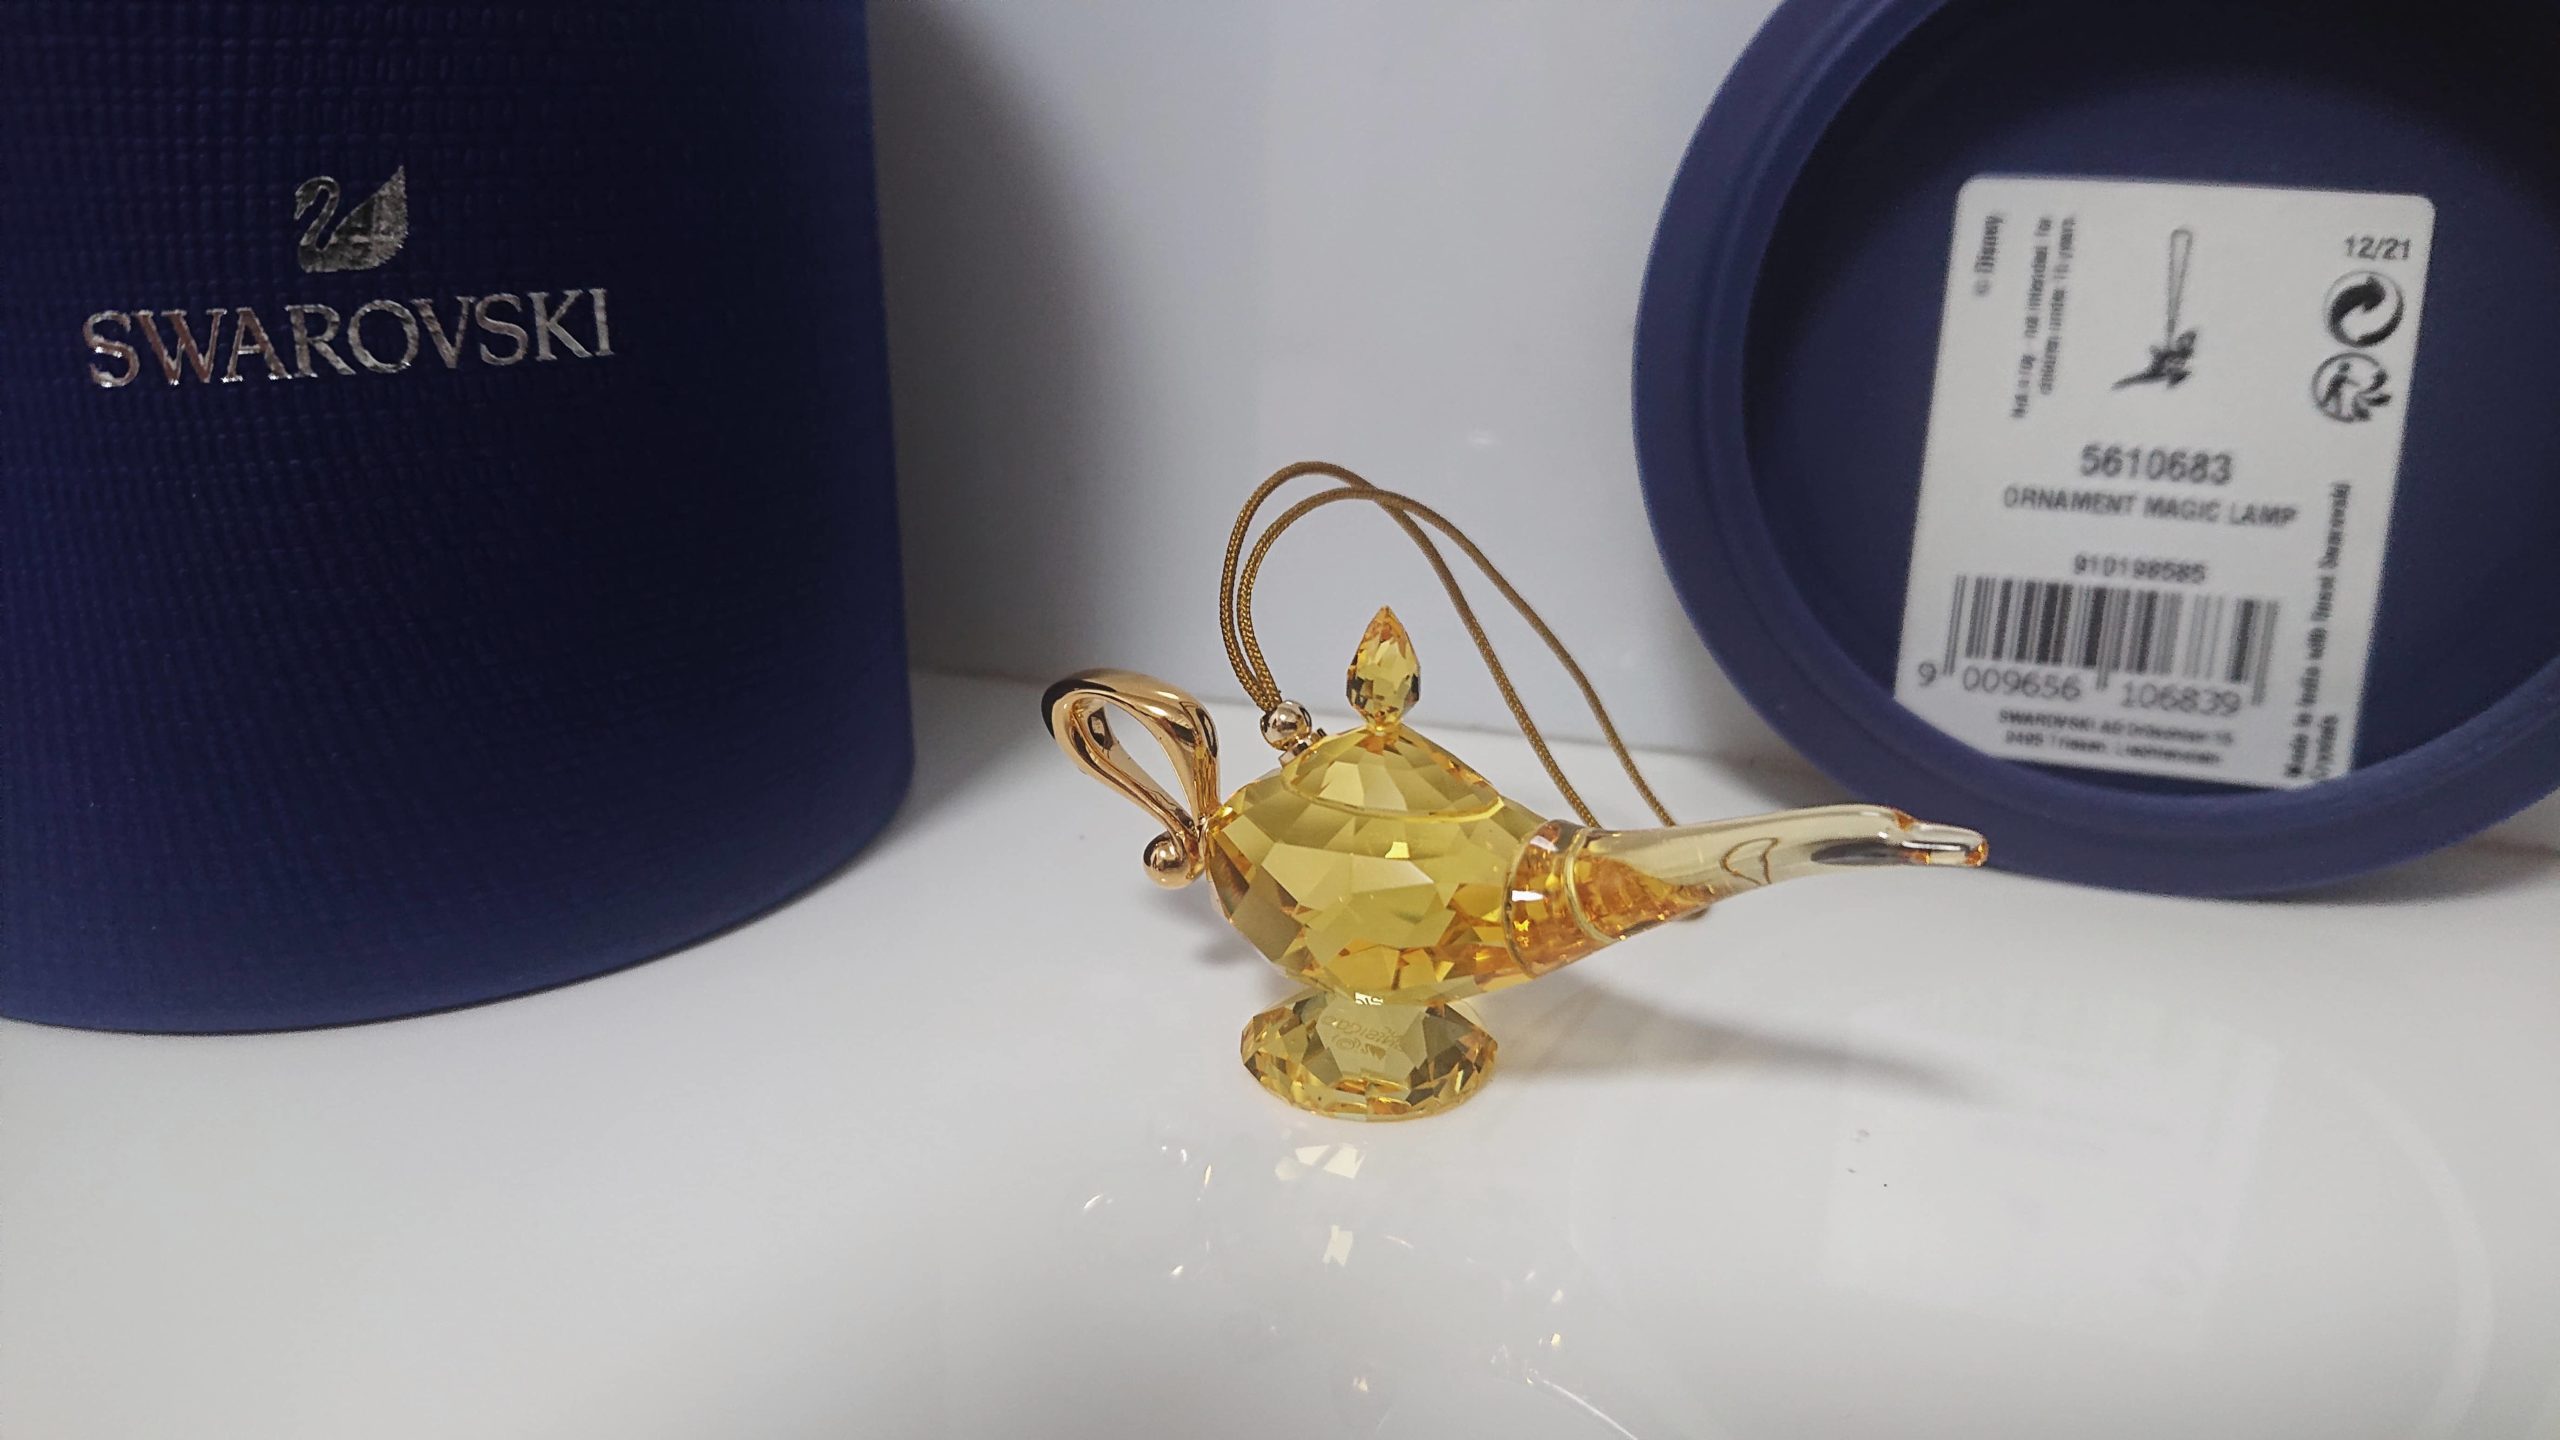 5610683 Collectorshop Lamp Swarovski Wunderlampe Ornament Magic - Disney Sammler Aladdin